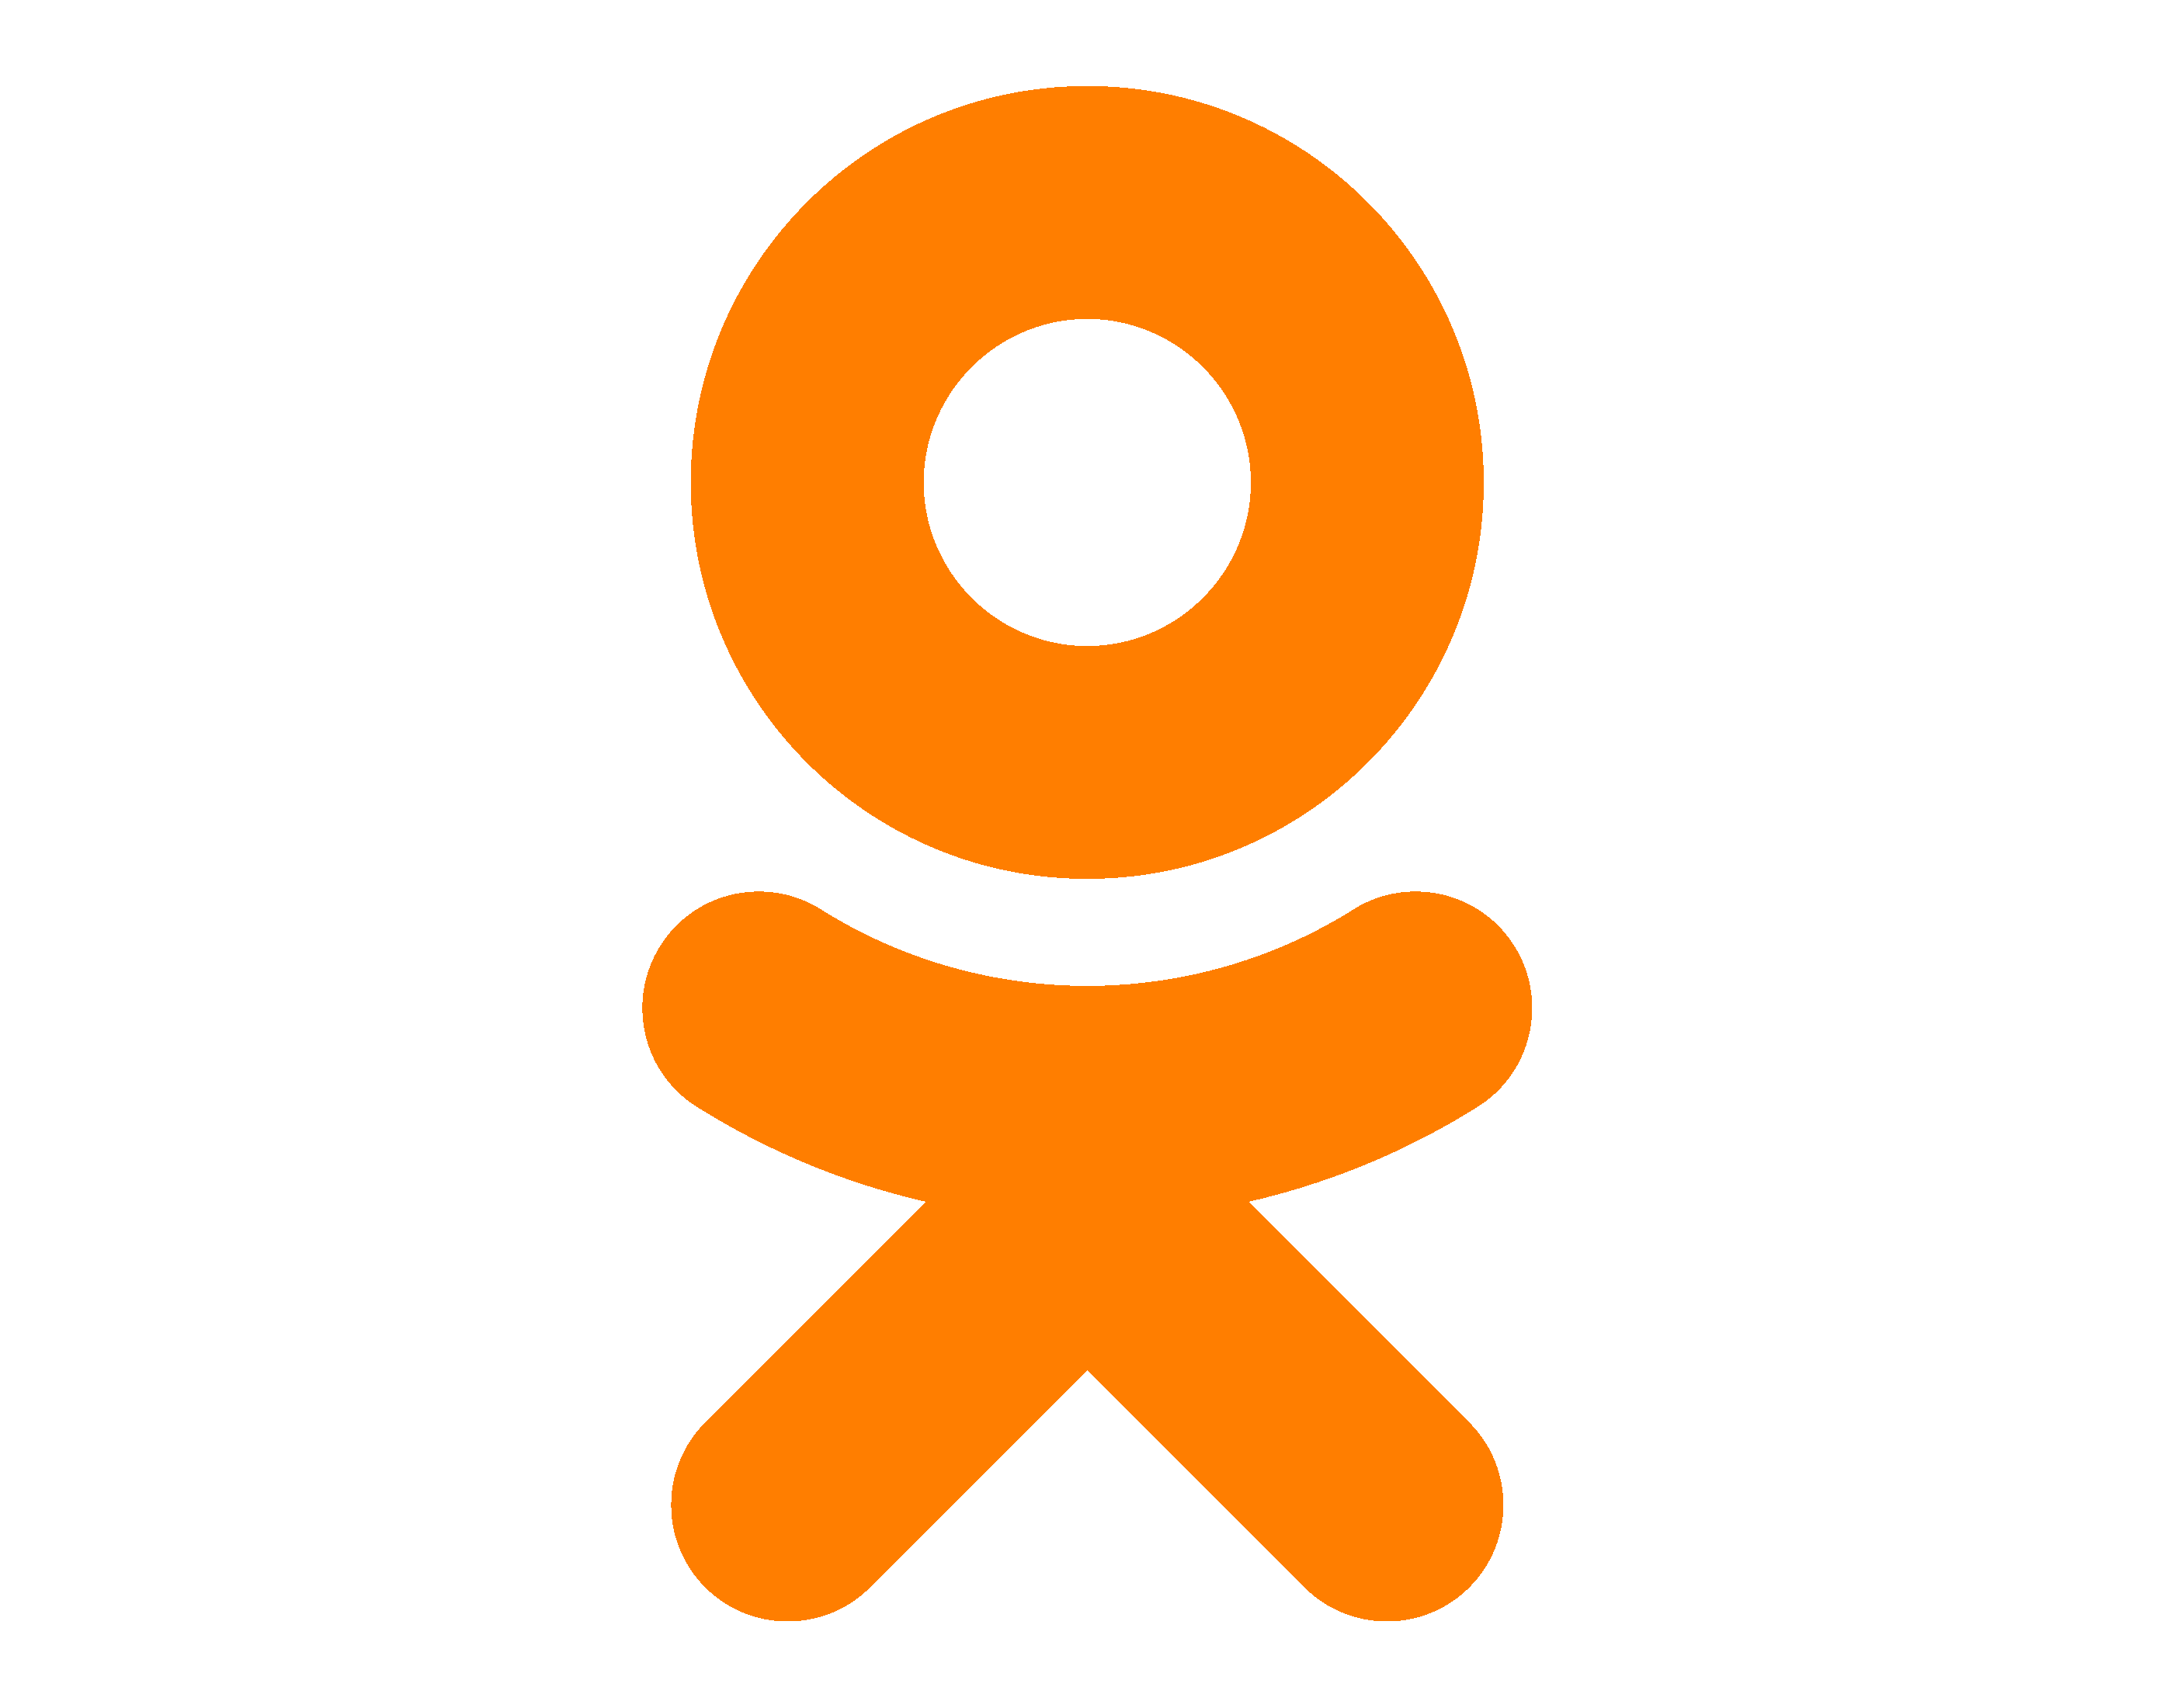 Odnoklassniki Logo, Odnoklassniki Symbol, Meaning, History and Evolution